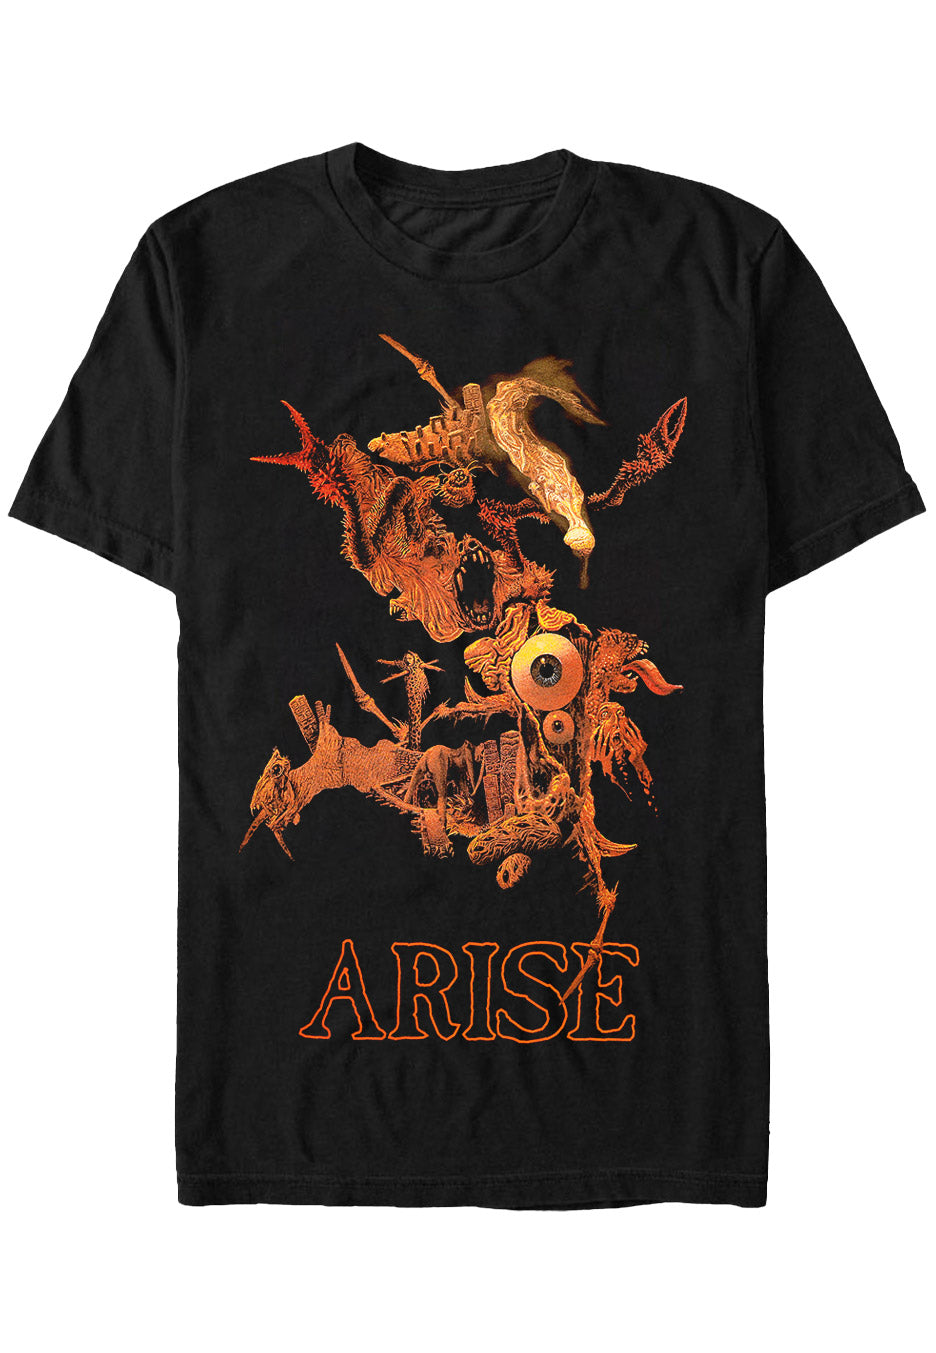 Sepultura - Arise 30 Years - T-Shirt